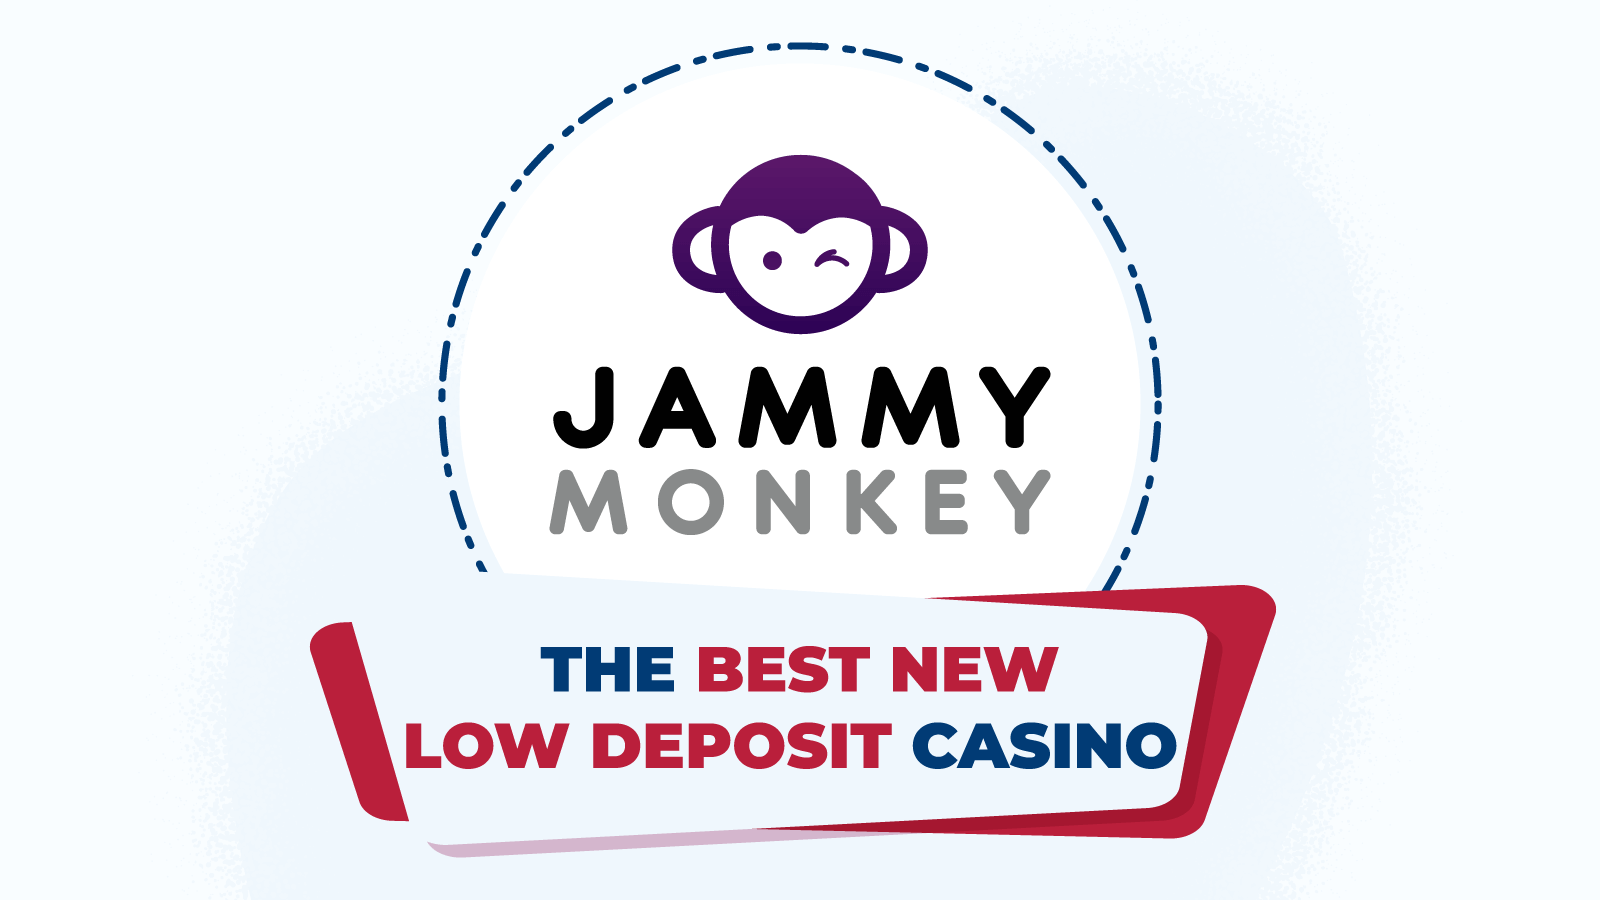 The best new low deposit casino – Jammy Monkey Casino